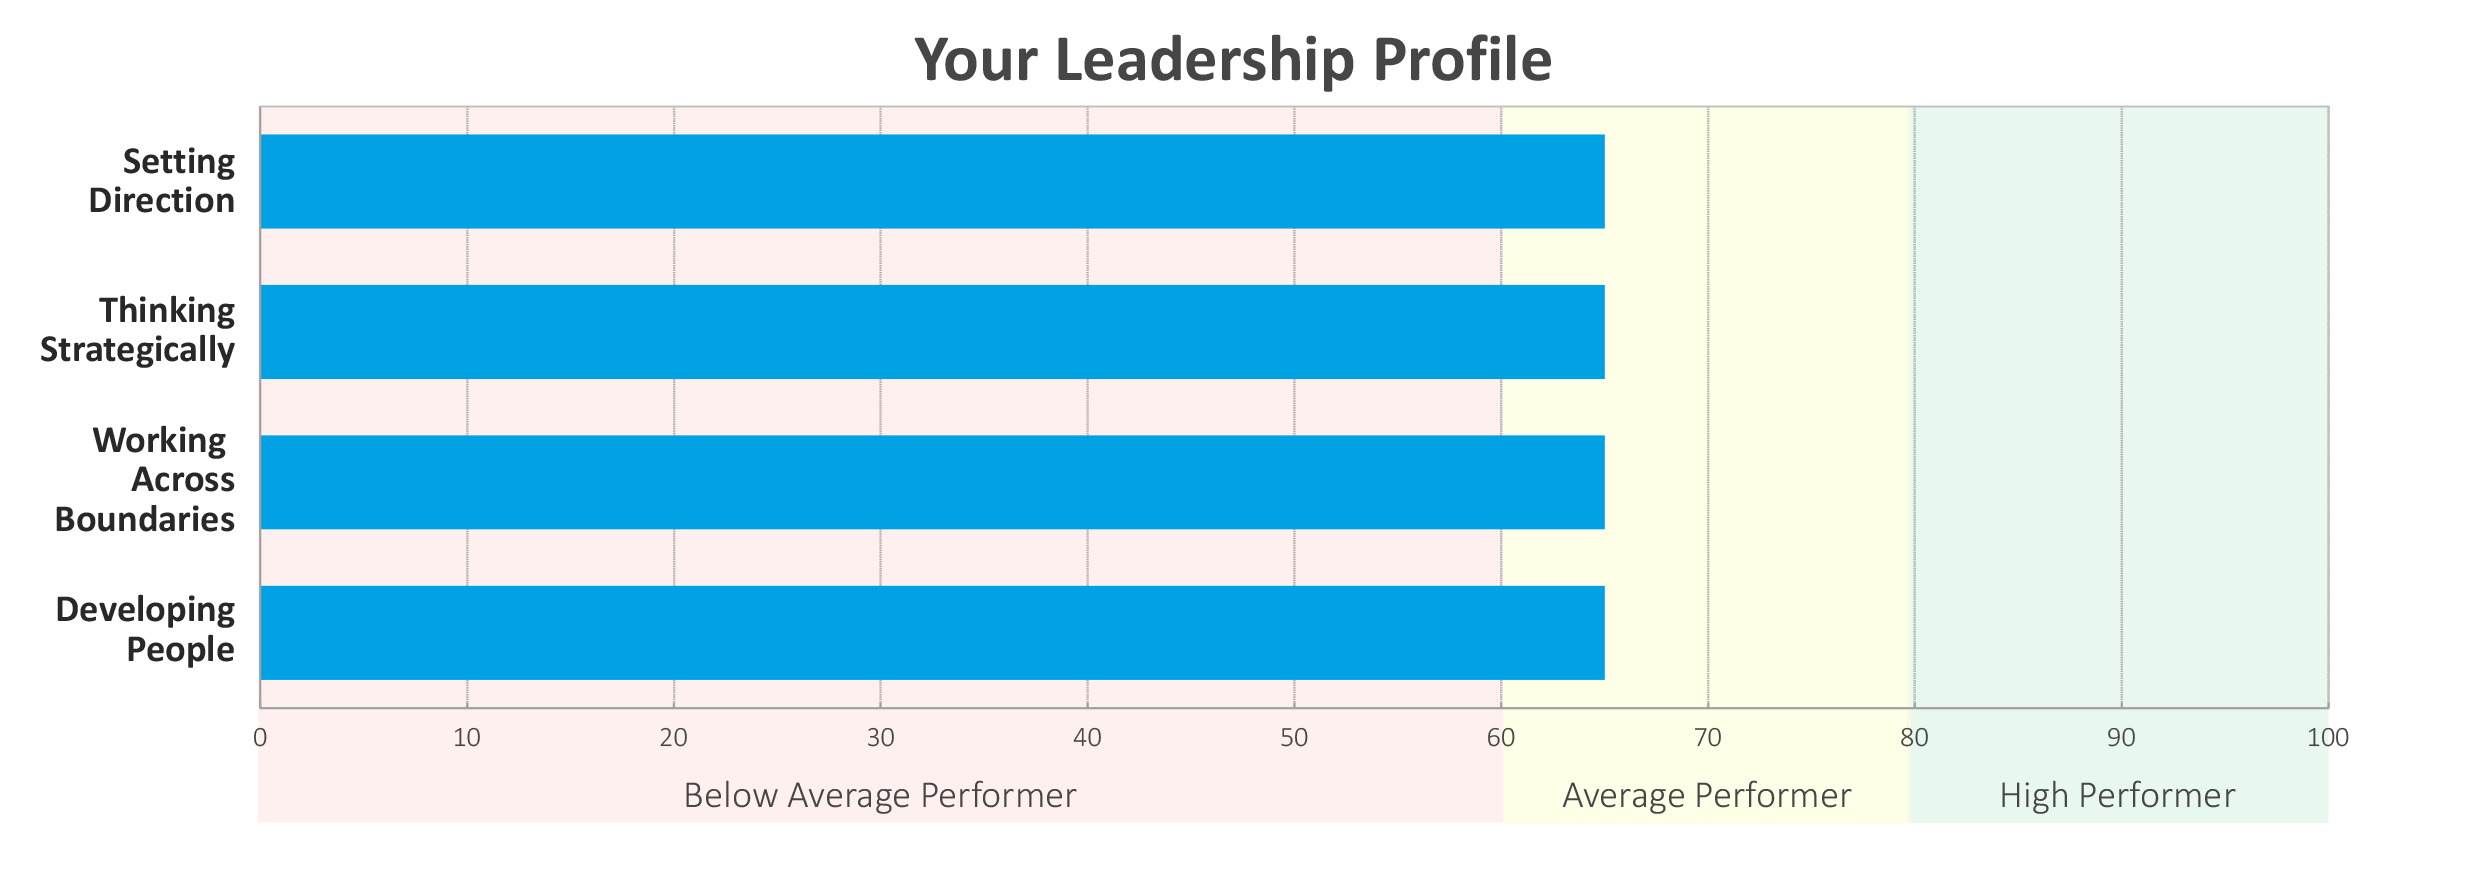 Your_Leadership_Profile